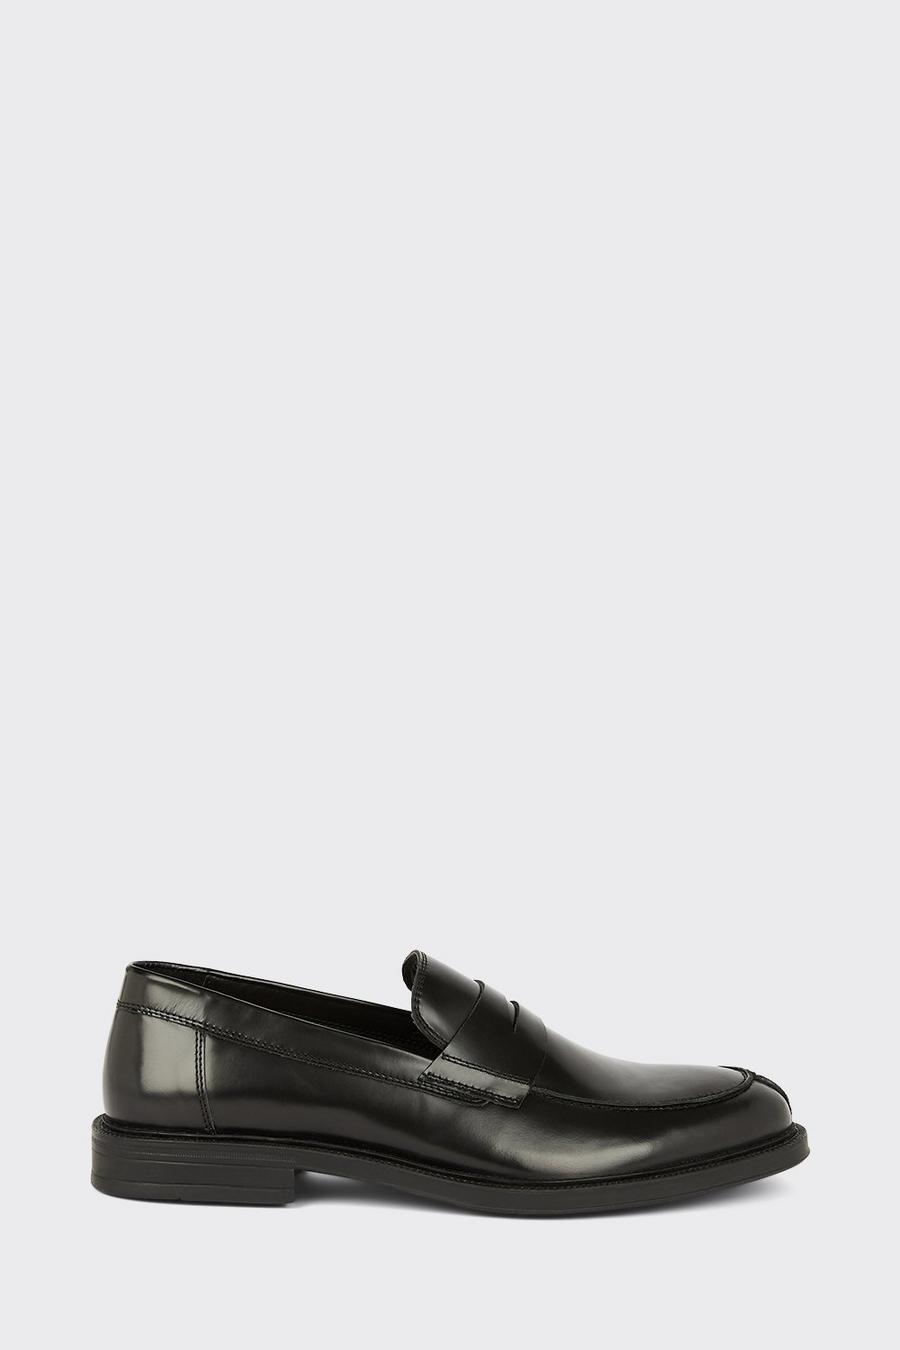 Black Smart Leather Slip On Loafers